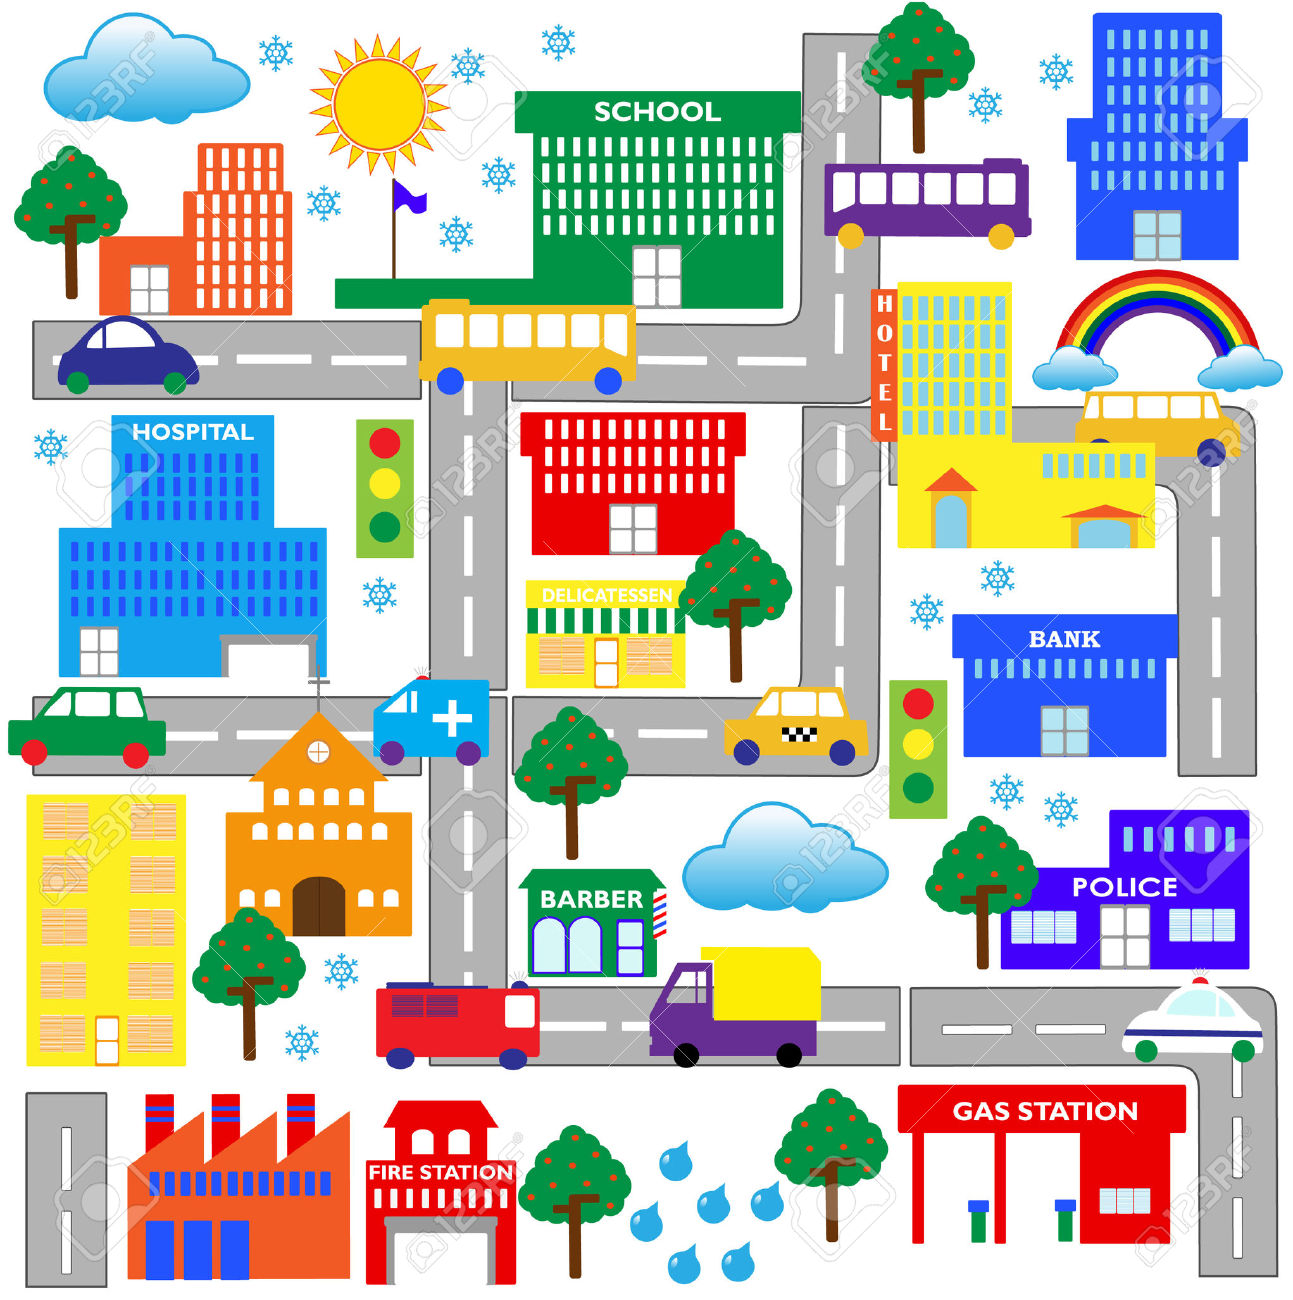 clip art map of town